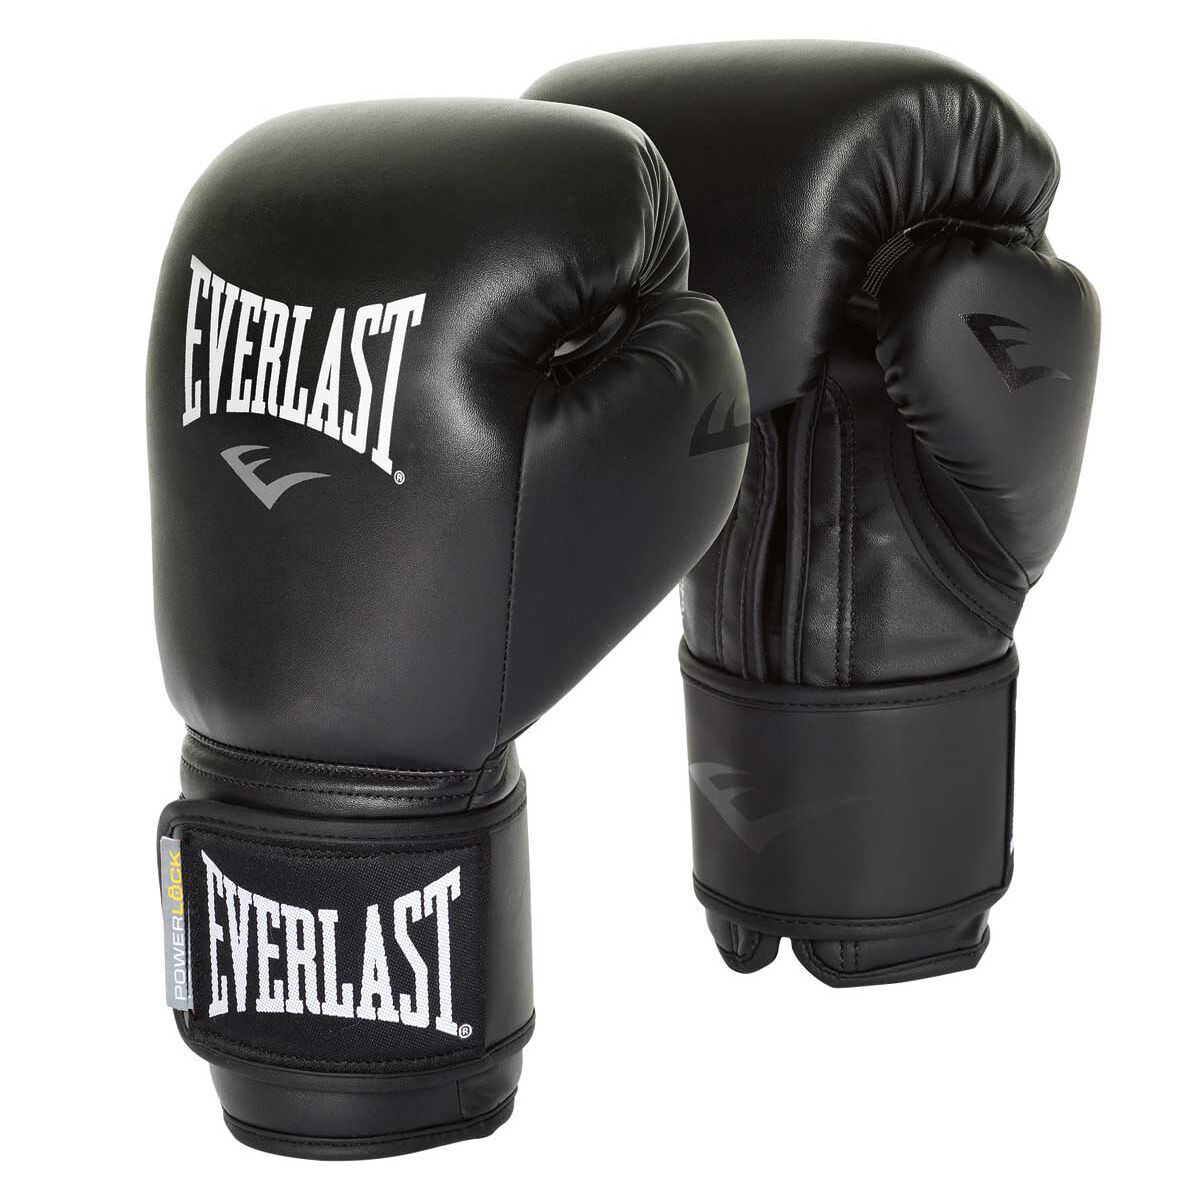 Black with Evershield PO#1212507 Everlast Boxing Gloves 16 Oz 